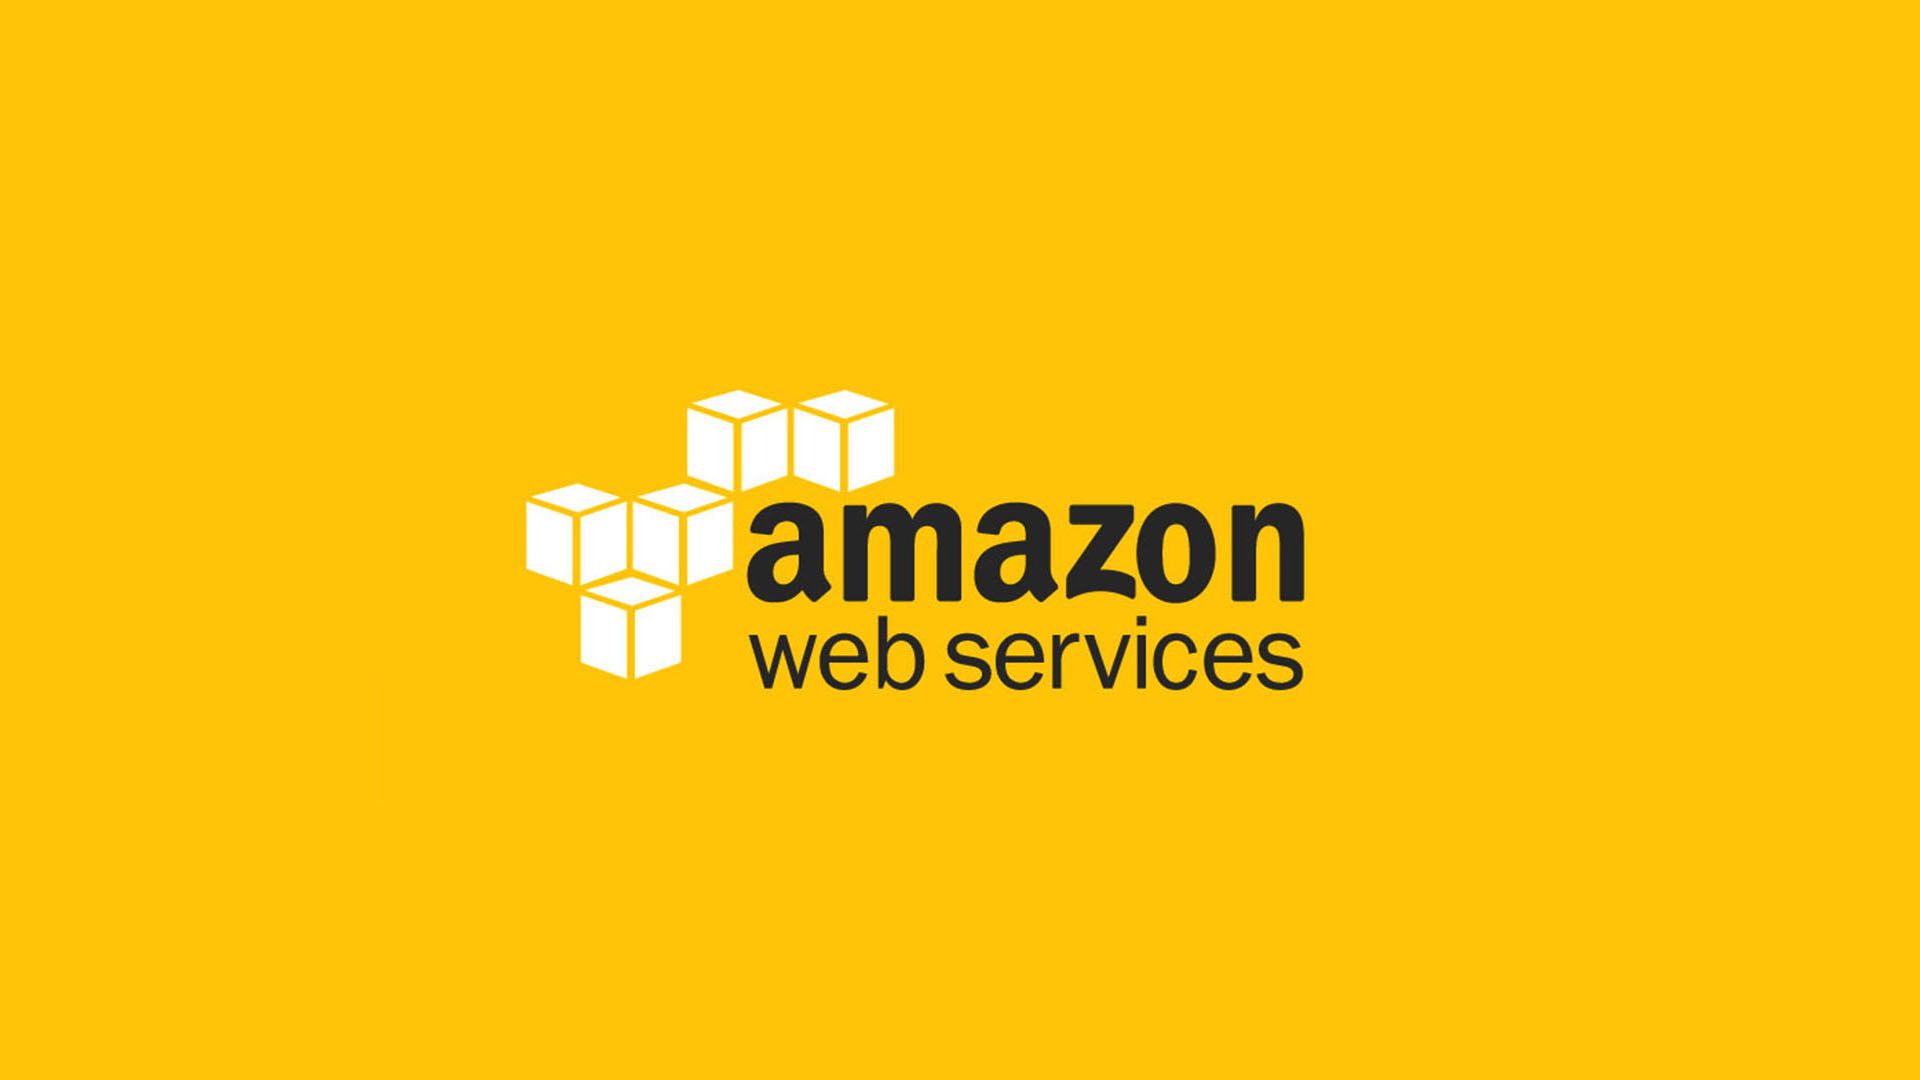 Amazon Web Services Wallpapers  Top Free Amazon Web Services Backgrounds   WallpaperAccess